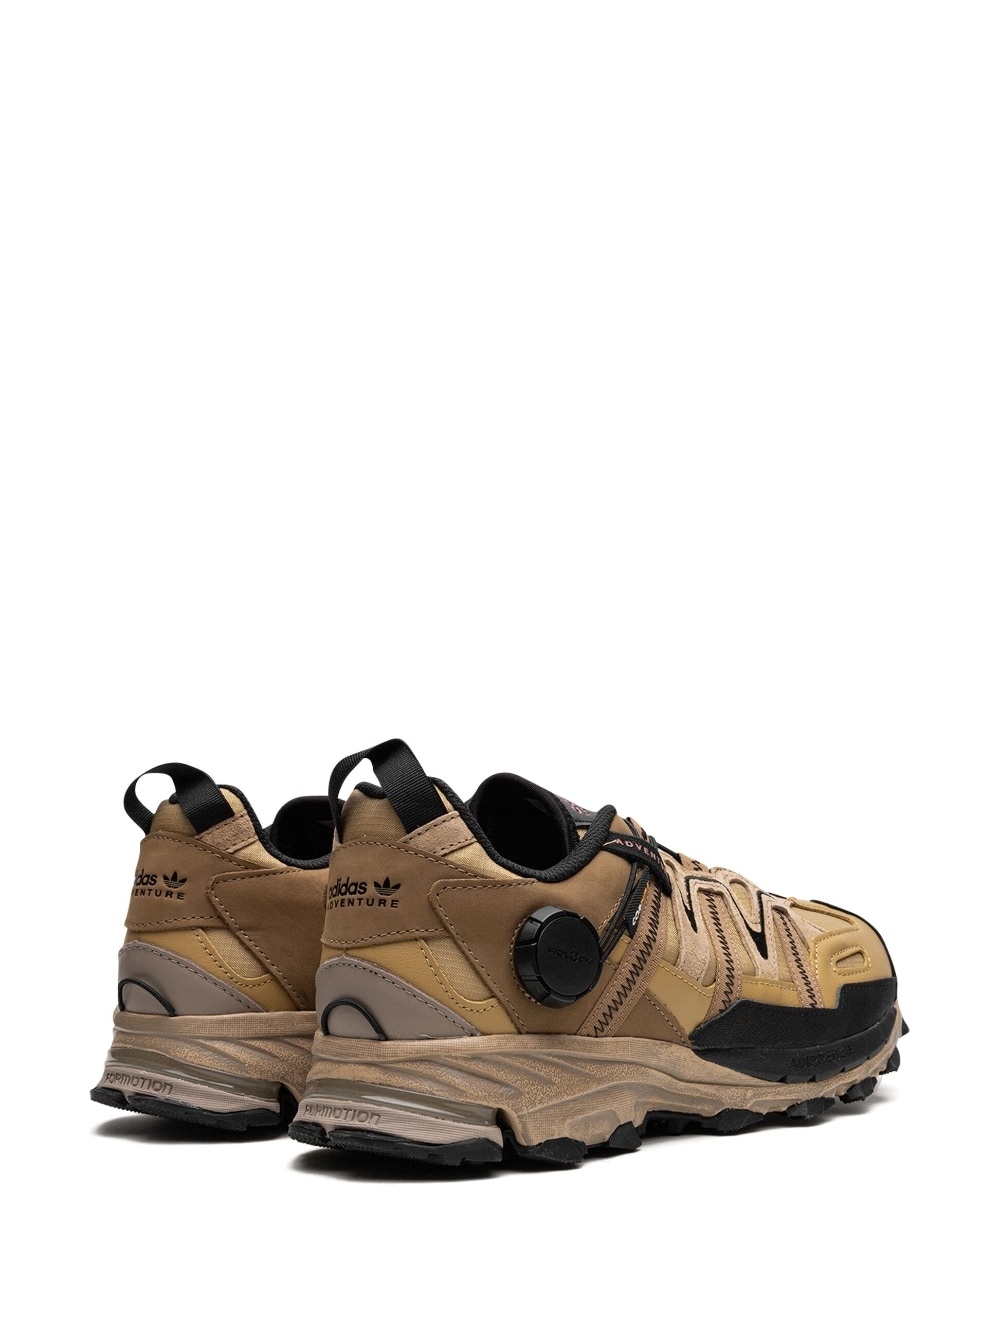 Hyperturf Gaiter "Golden Biege" sneakers - 3